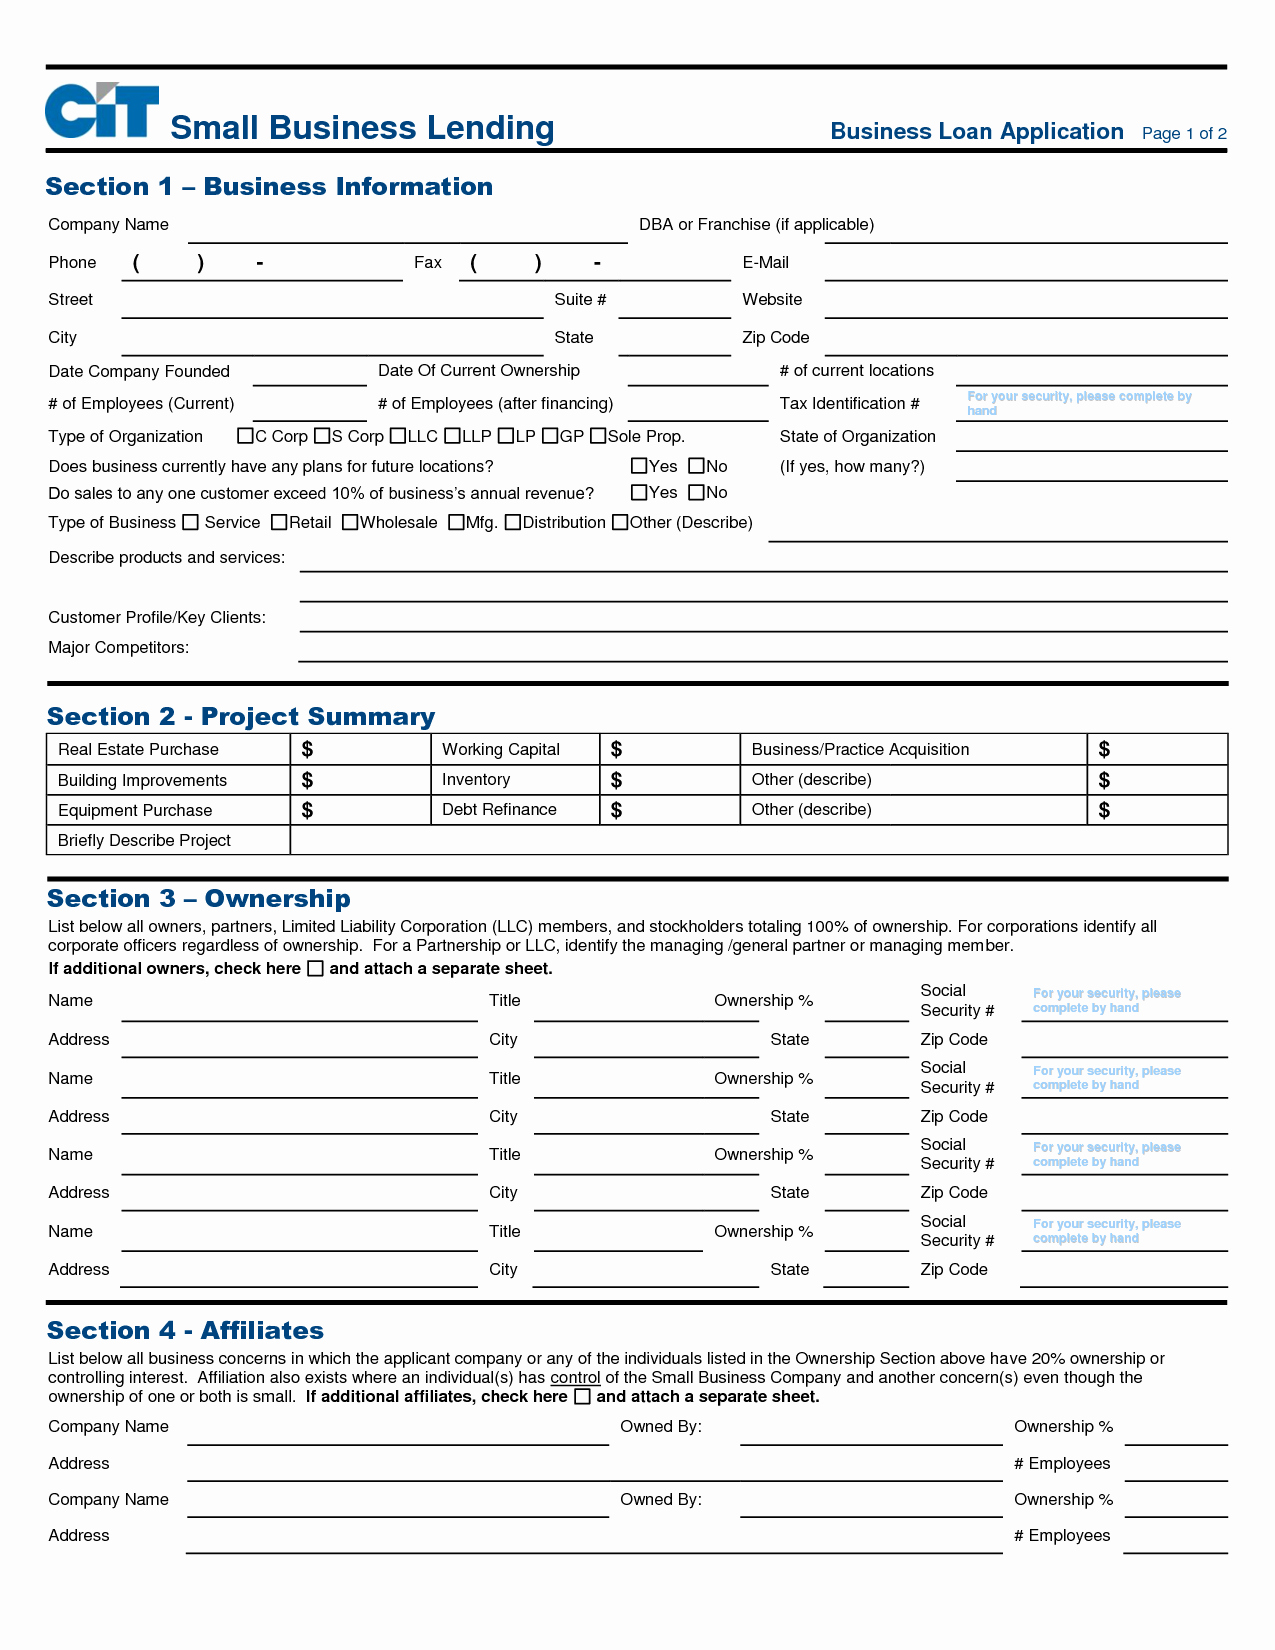 Business Loan Application form Sample